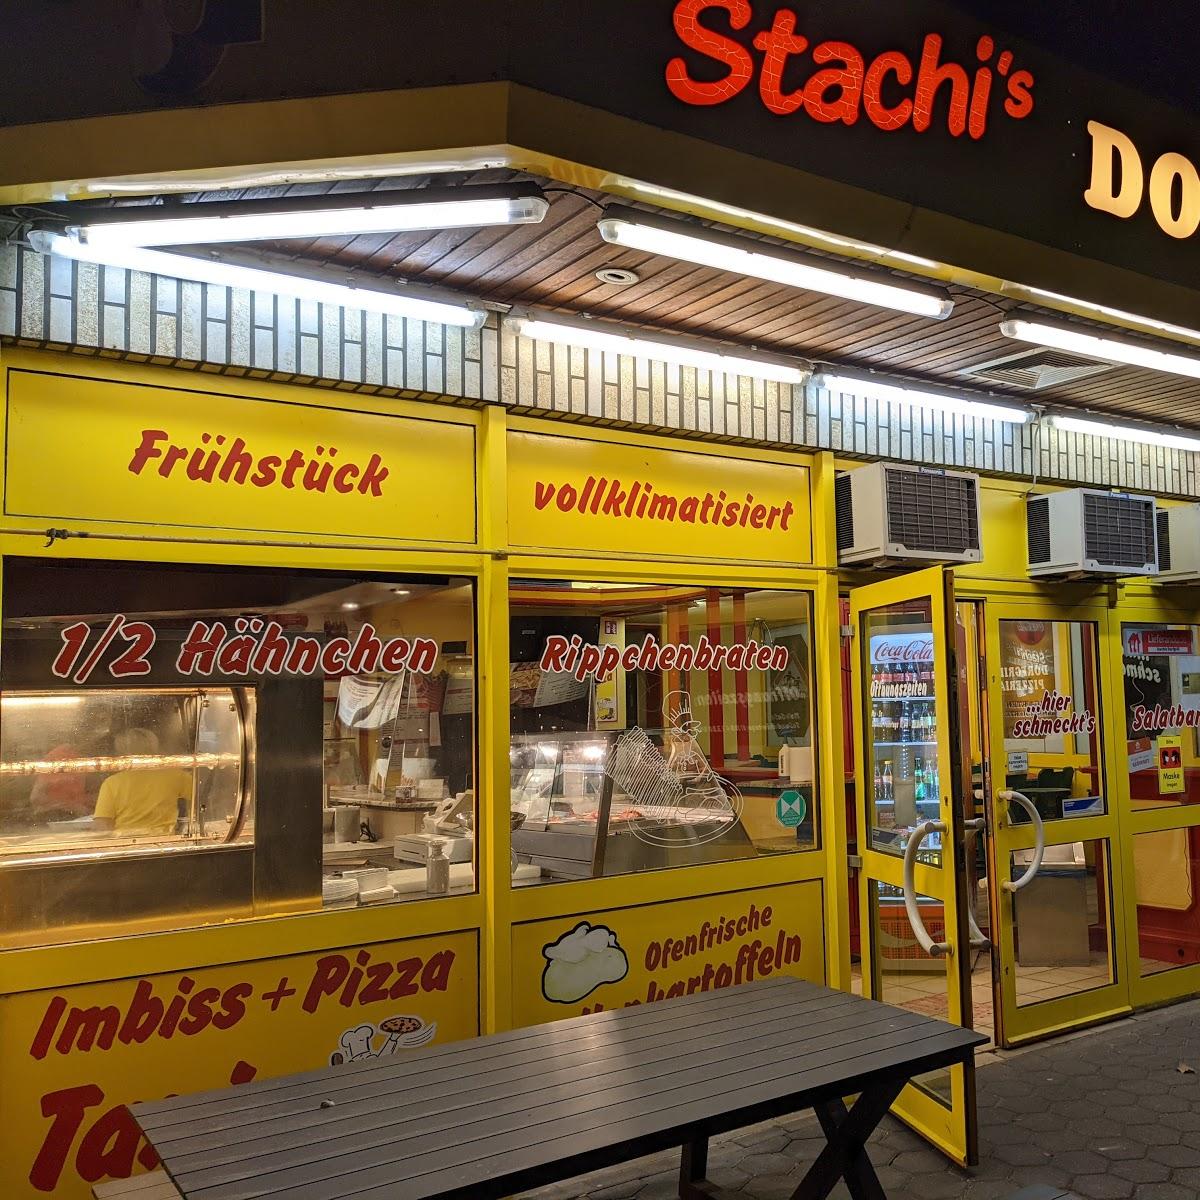 Restaurant "Stachis Dorfgrill" in Dortmund